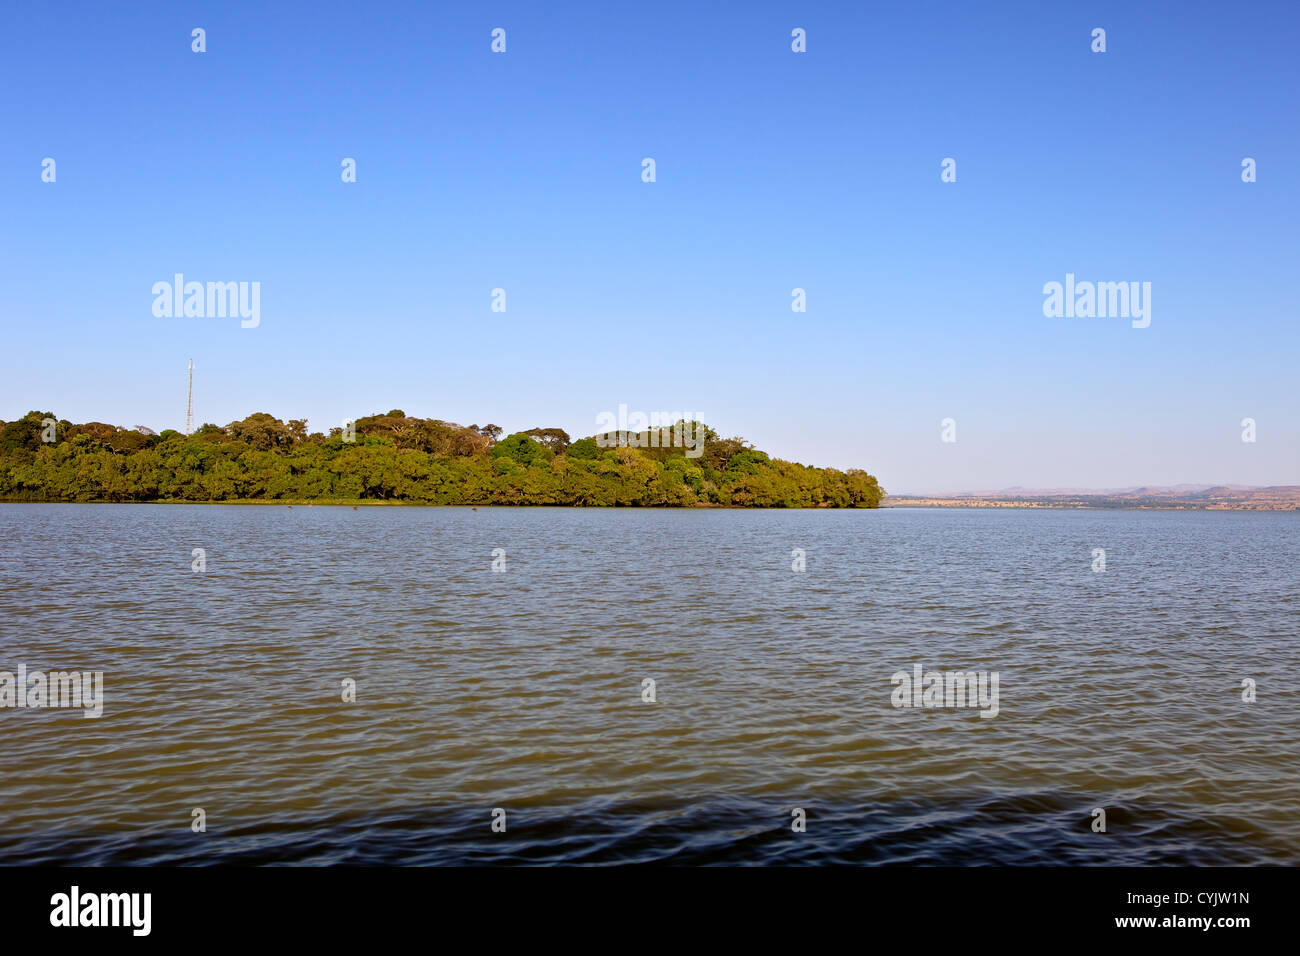 Zege Peninsula, Lake Tana, Bahir Dar, Ethiopia, Africa Stock Photo